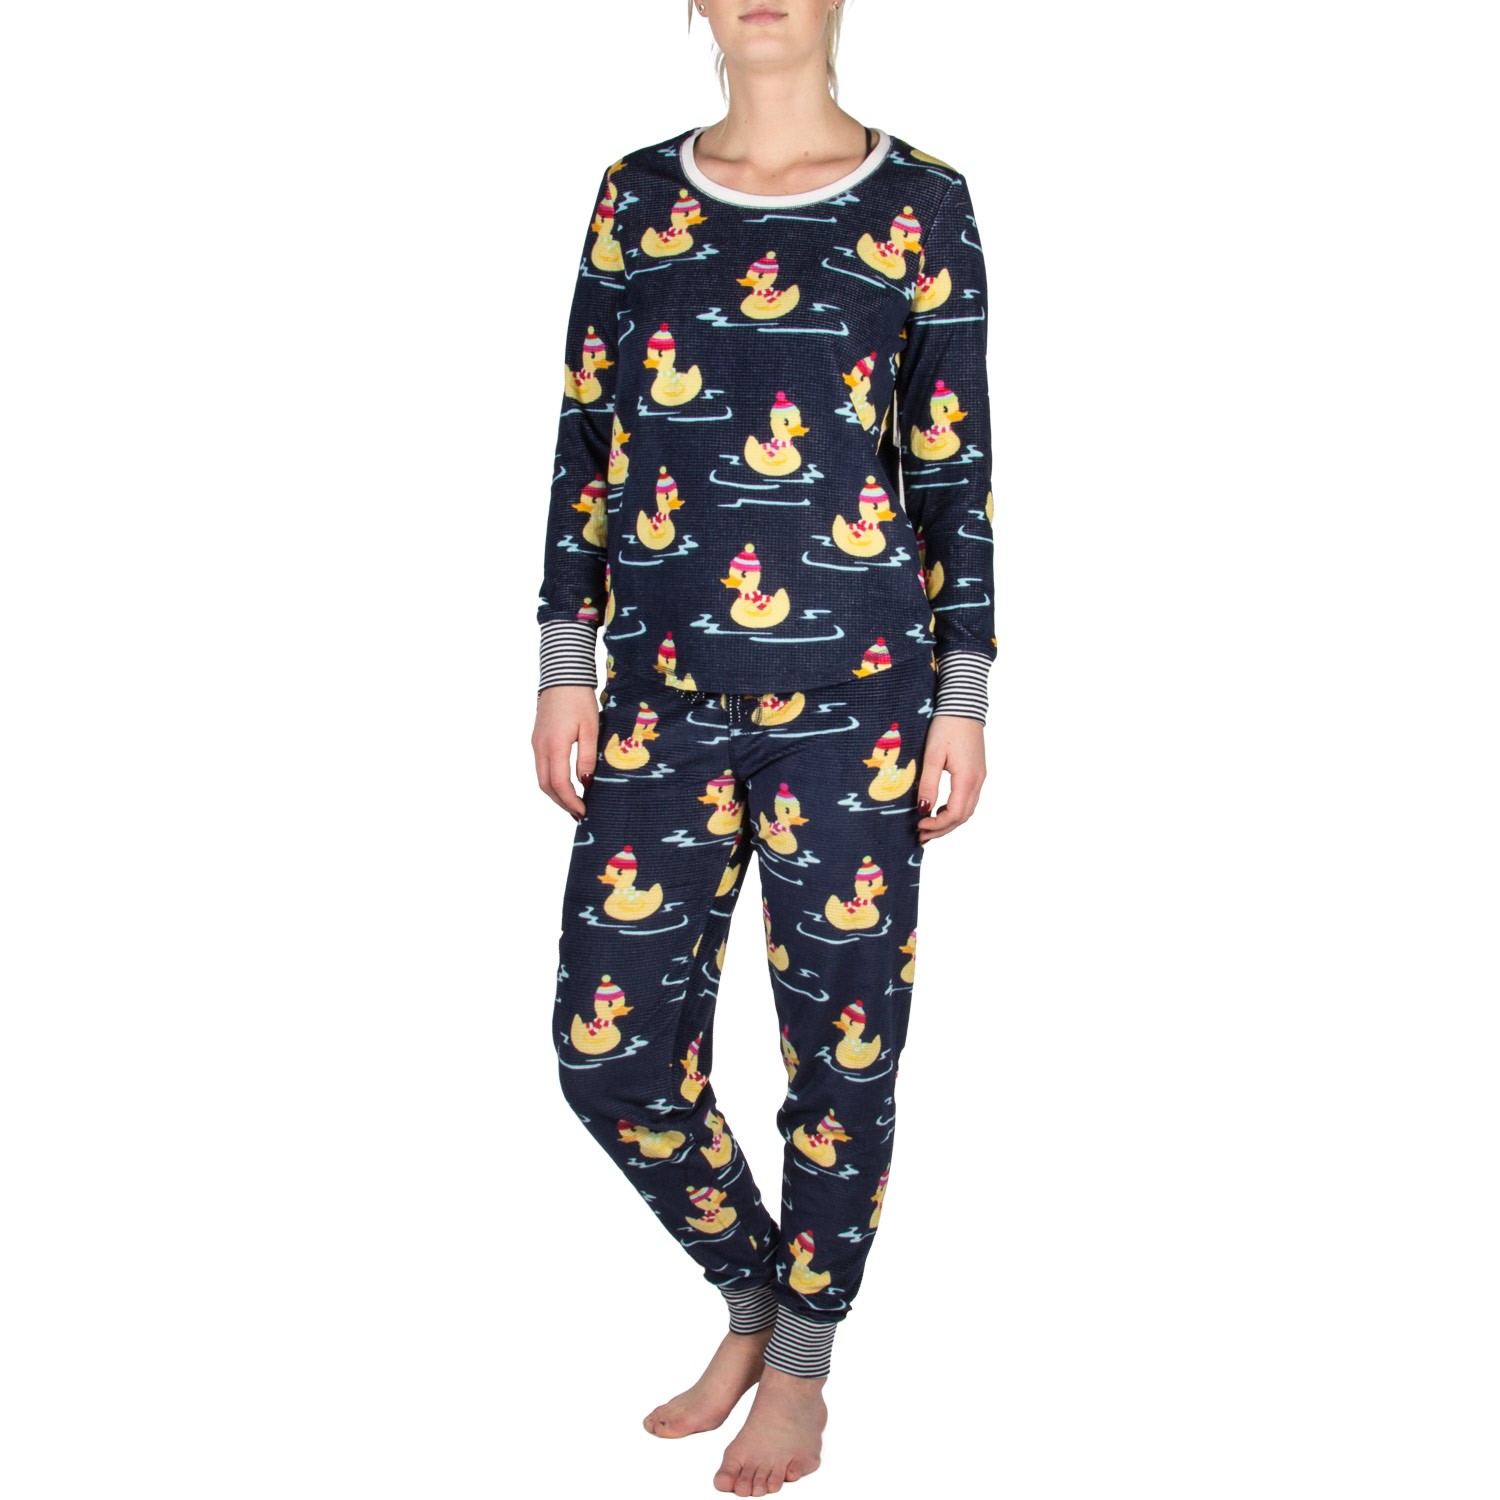 Pj Salvage Winter Ducks Pyjama Set